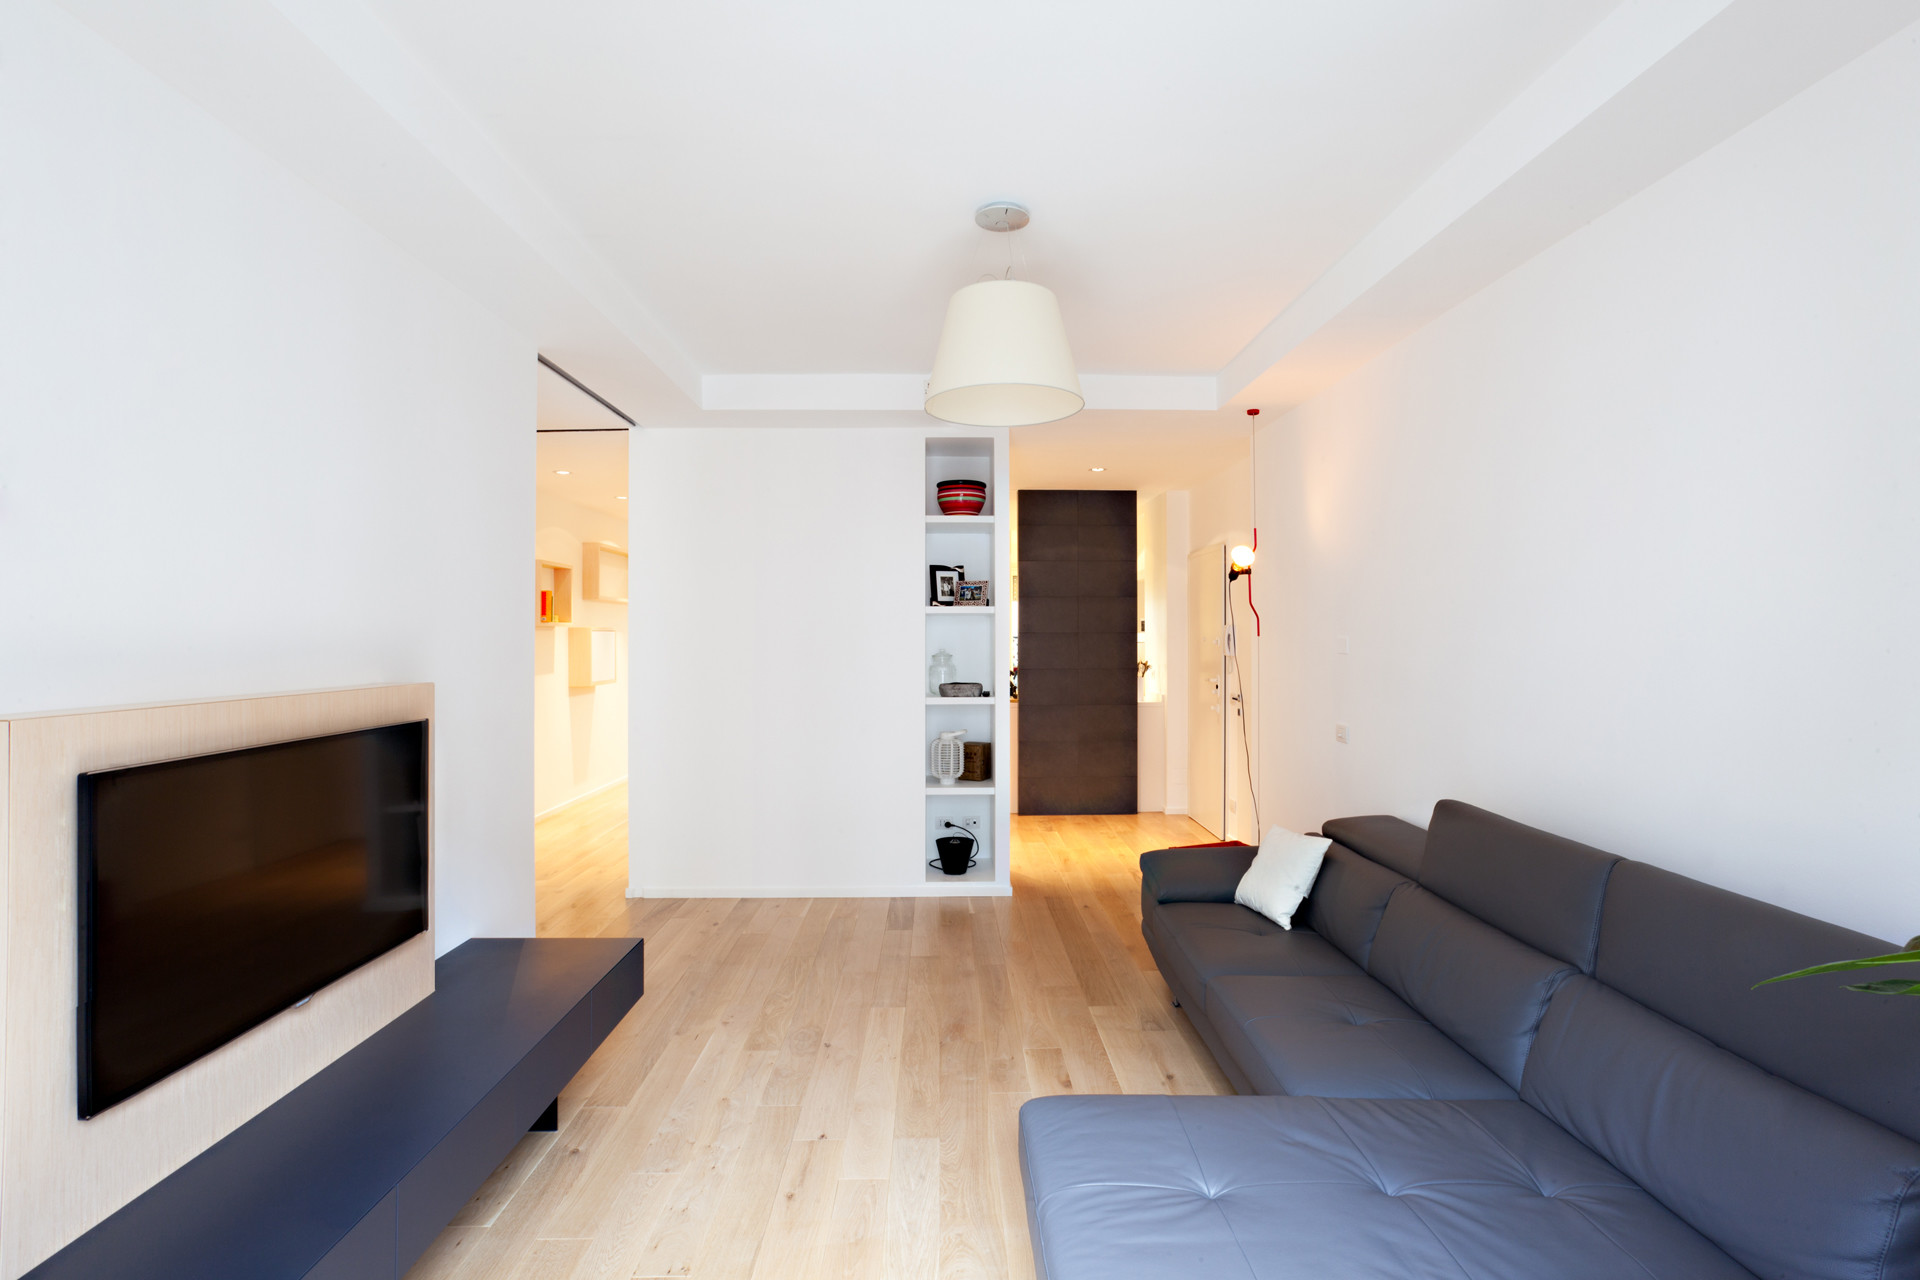 Wisp-Architects- Oxilia Apartment 8